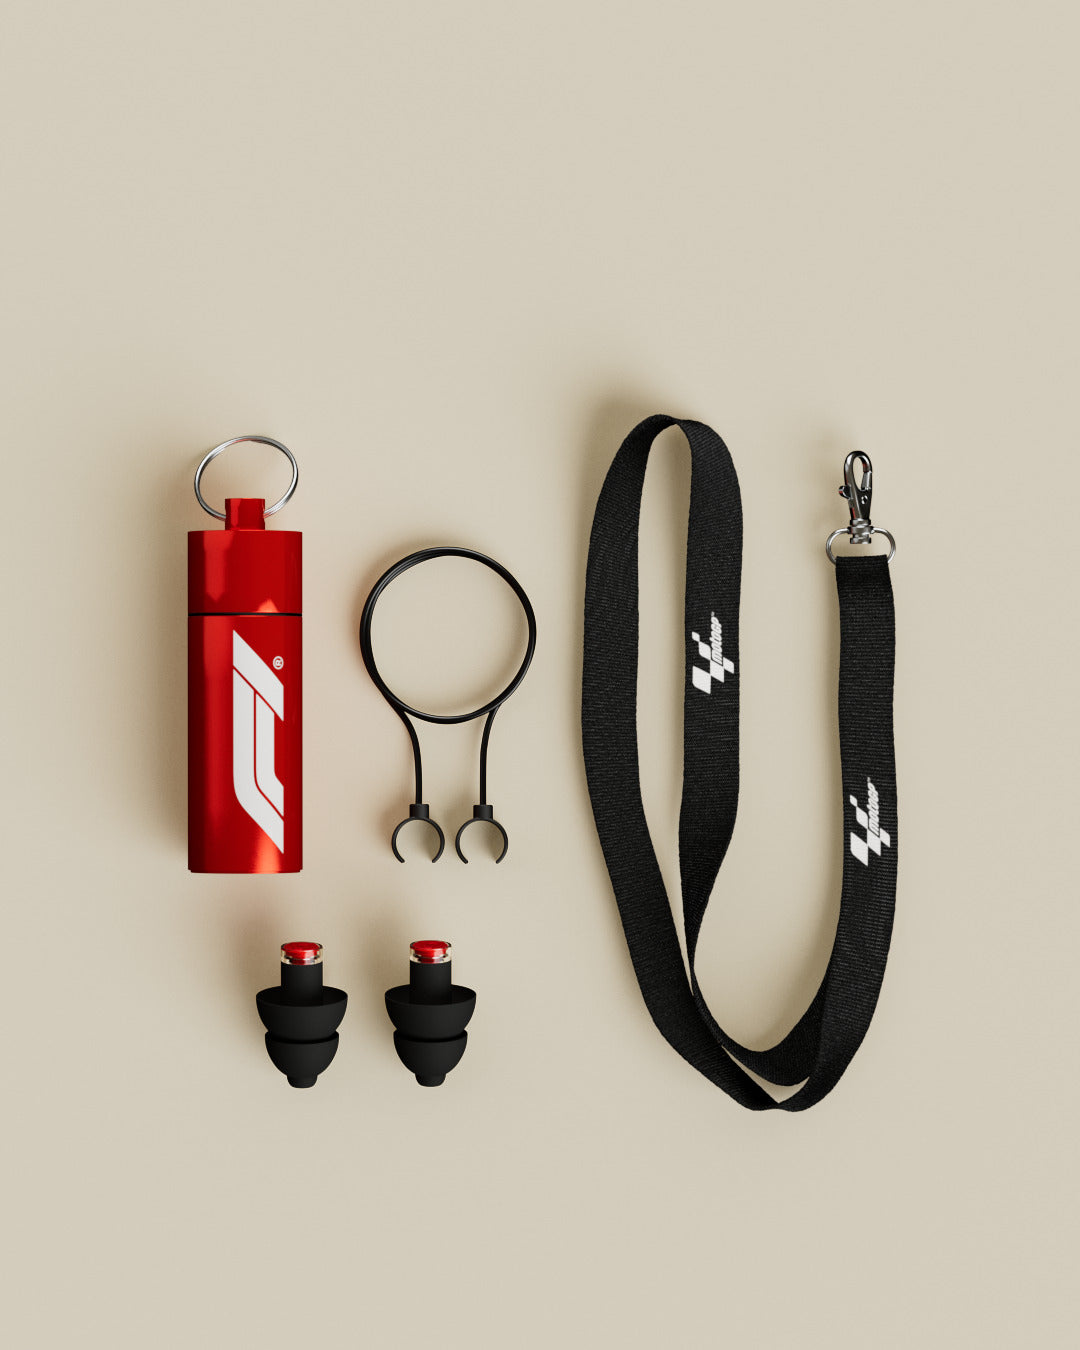 alpine formula 1 racing pro earplugs overview including accessories